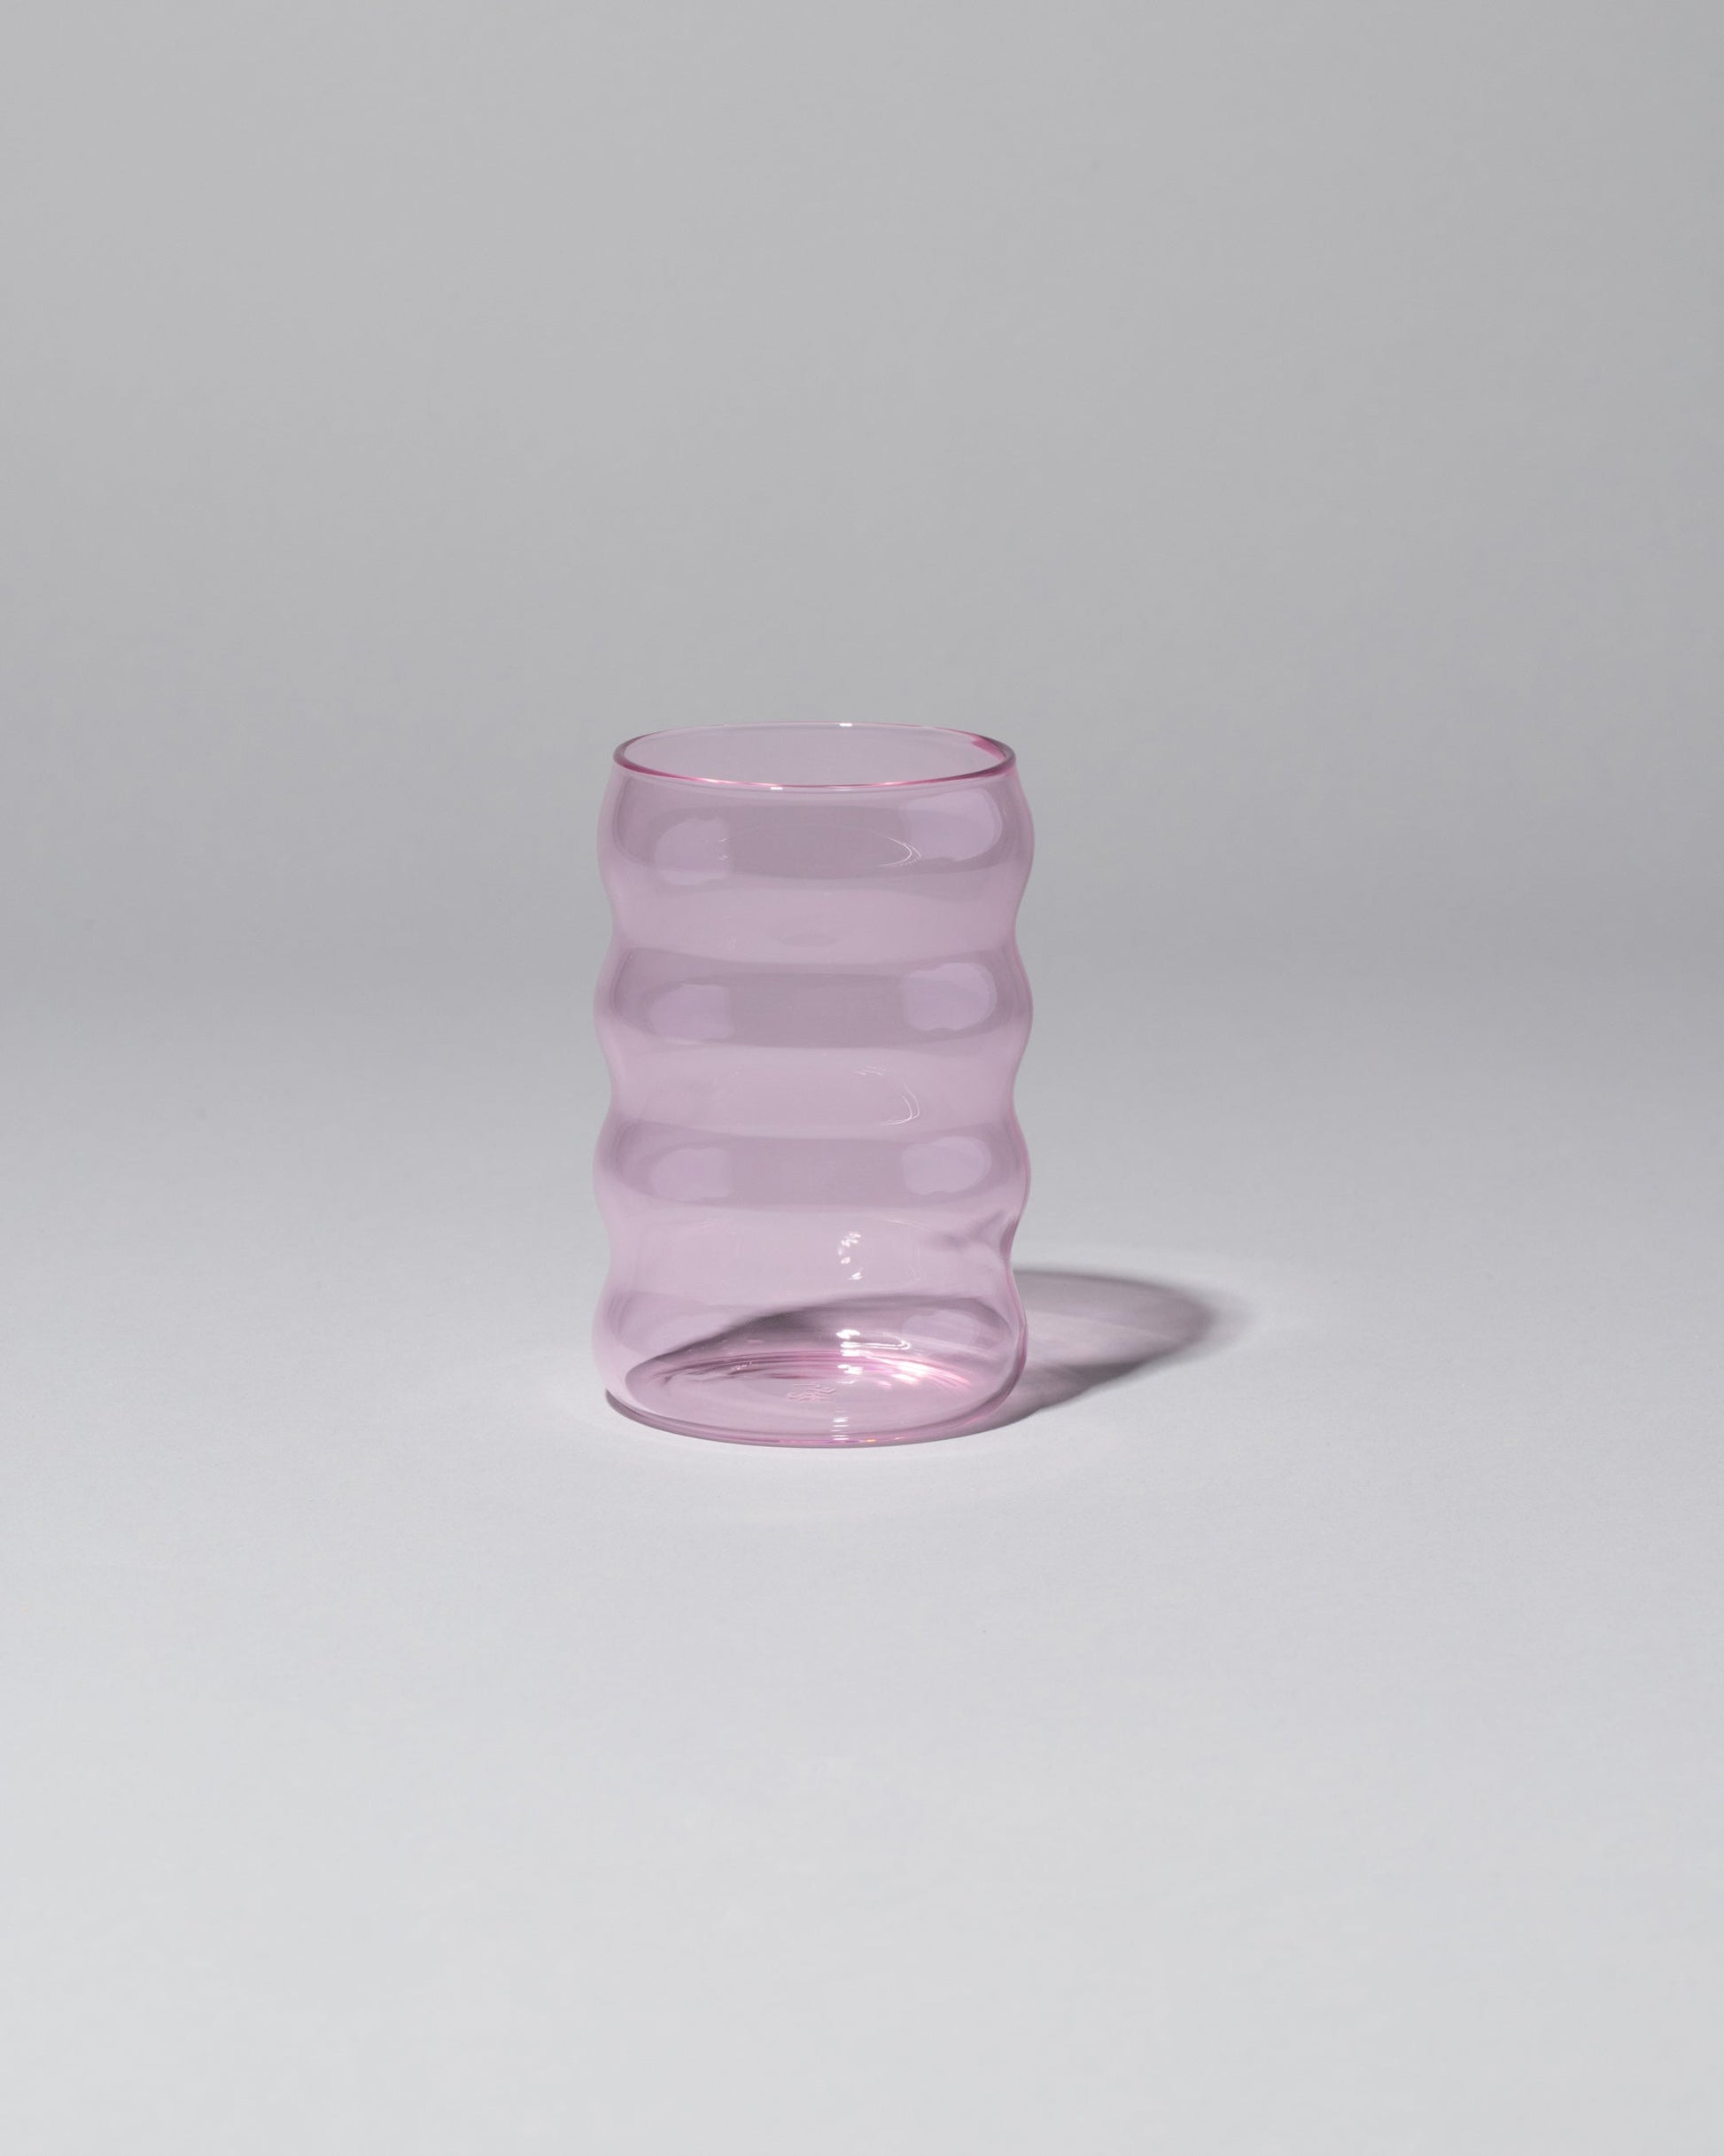 Sophie Lou Jacobsen Large Pink Single Ripple Cup on light color background.